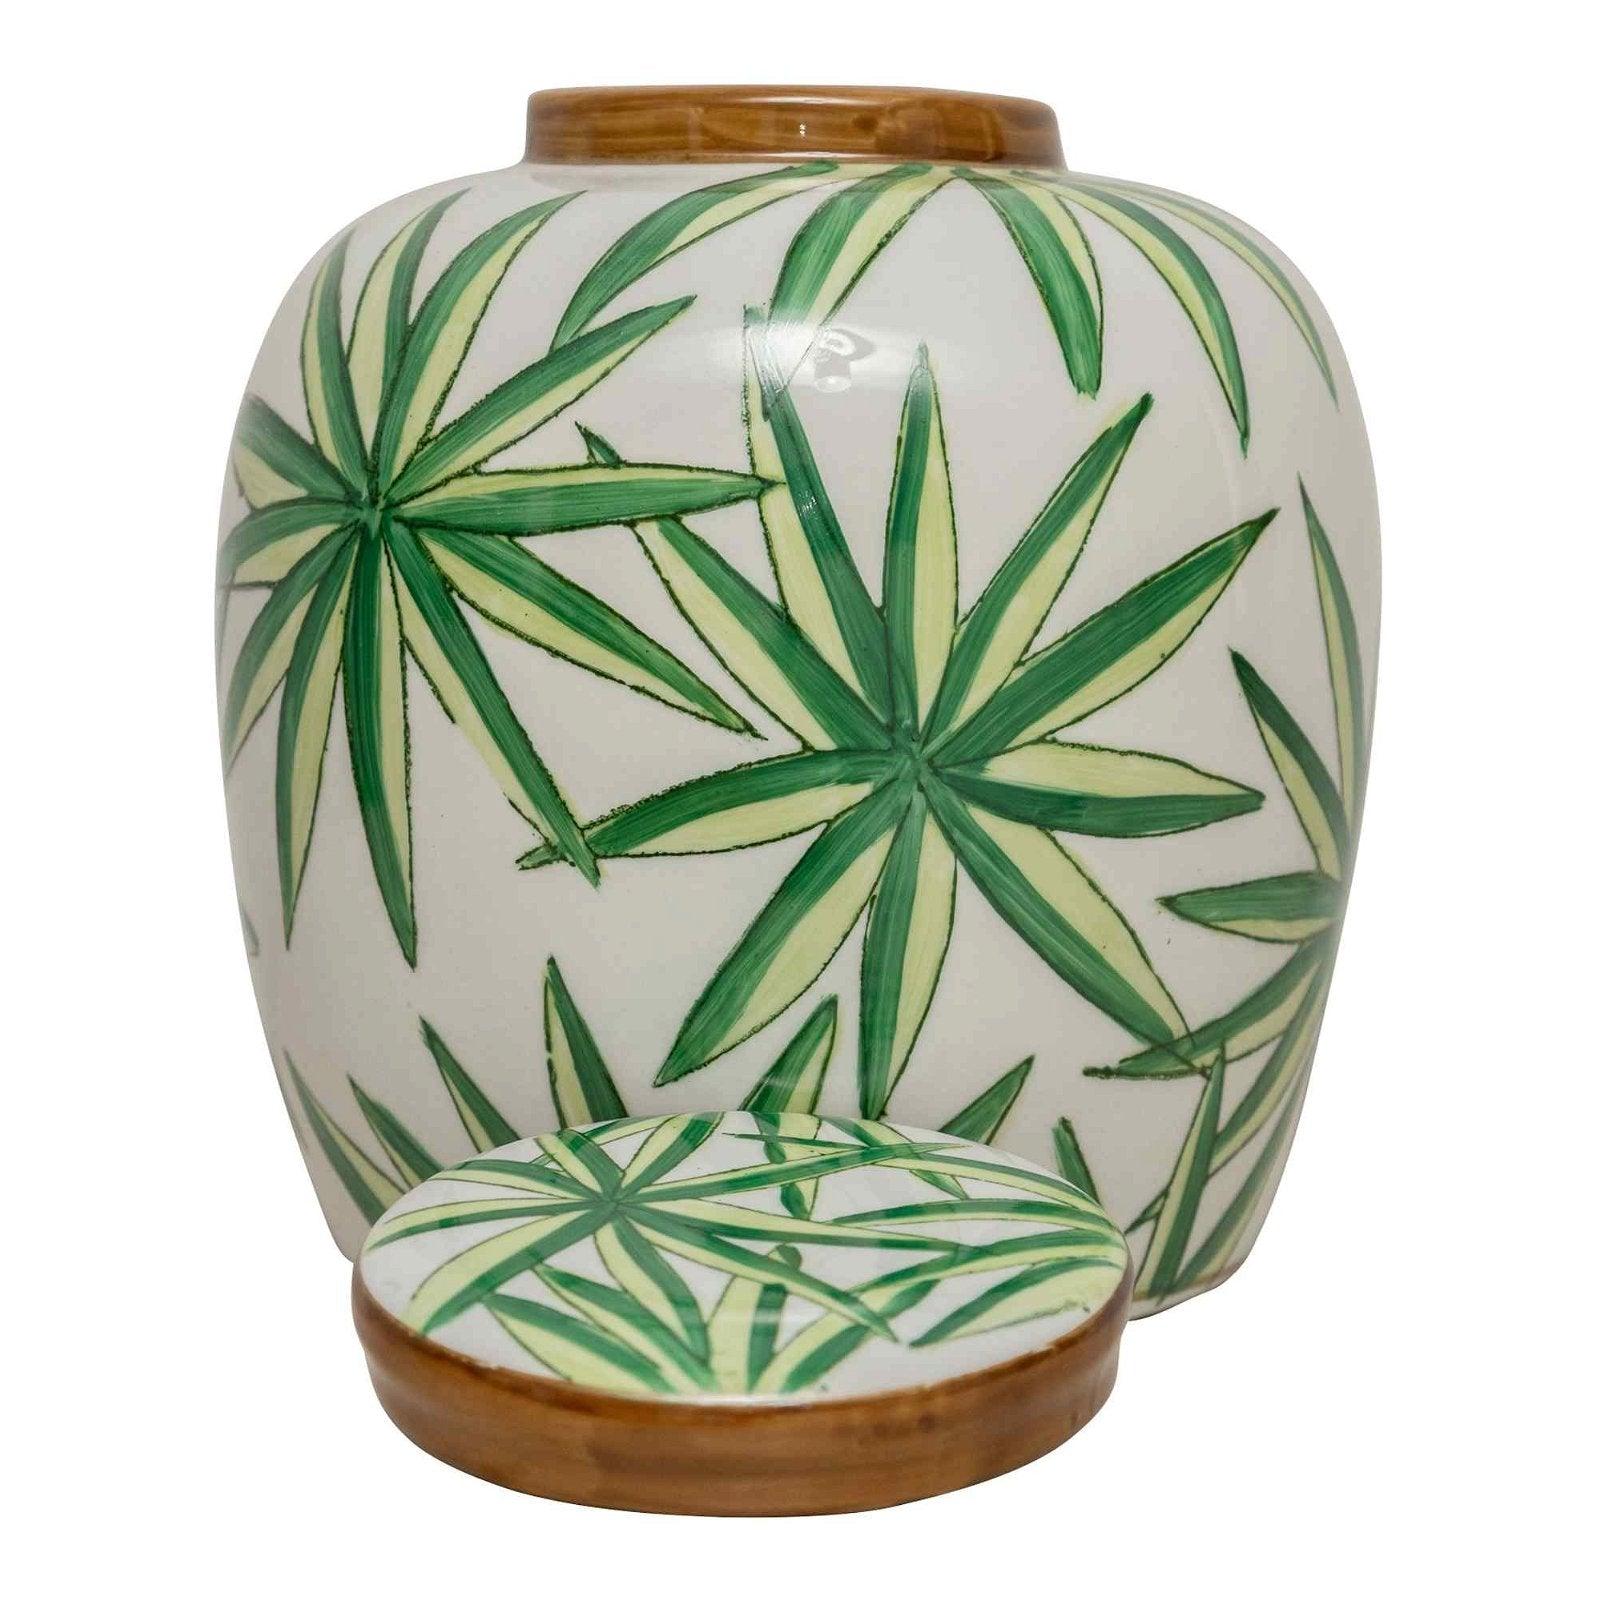 Adams Needle 9" Ginger Jar - £58.99 - Ceramic Ornaments 